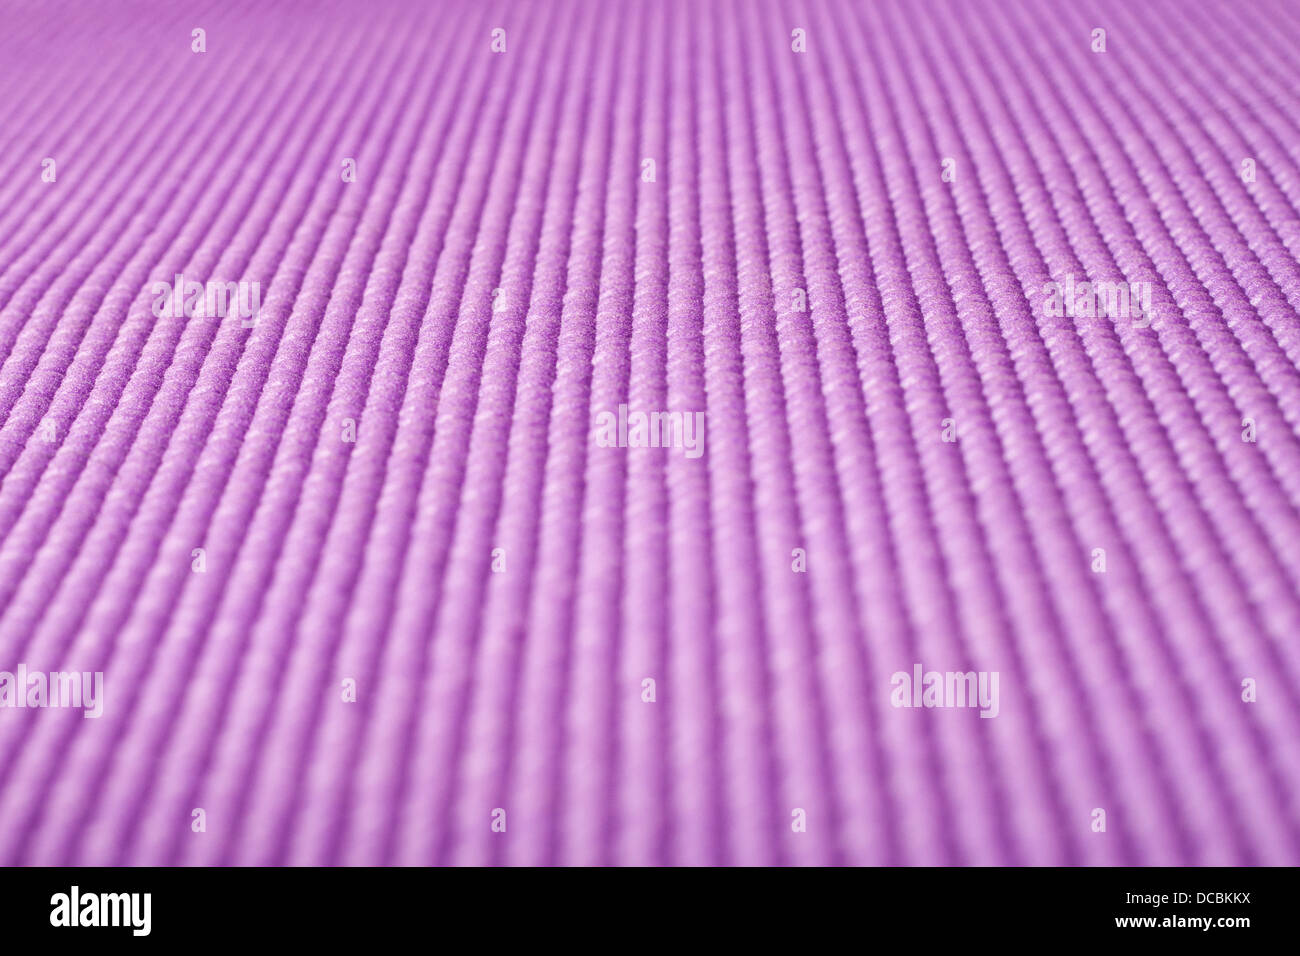 Close up shot of a purple yoga mat Stock Photo